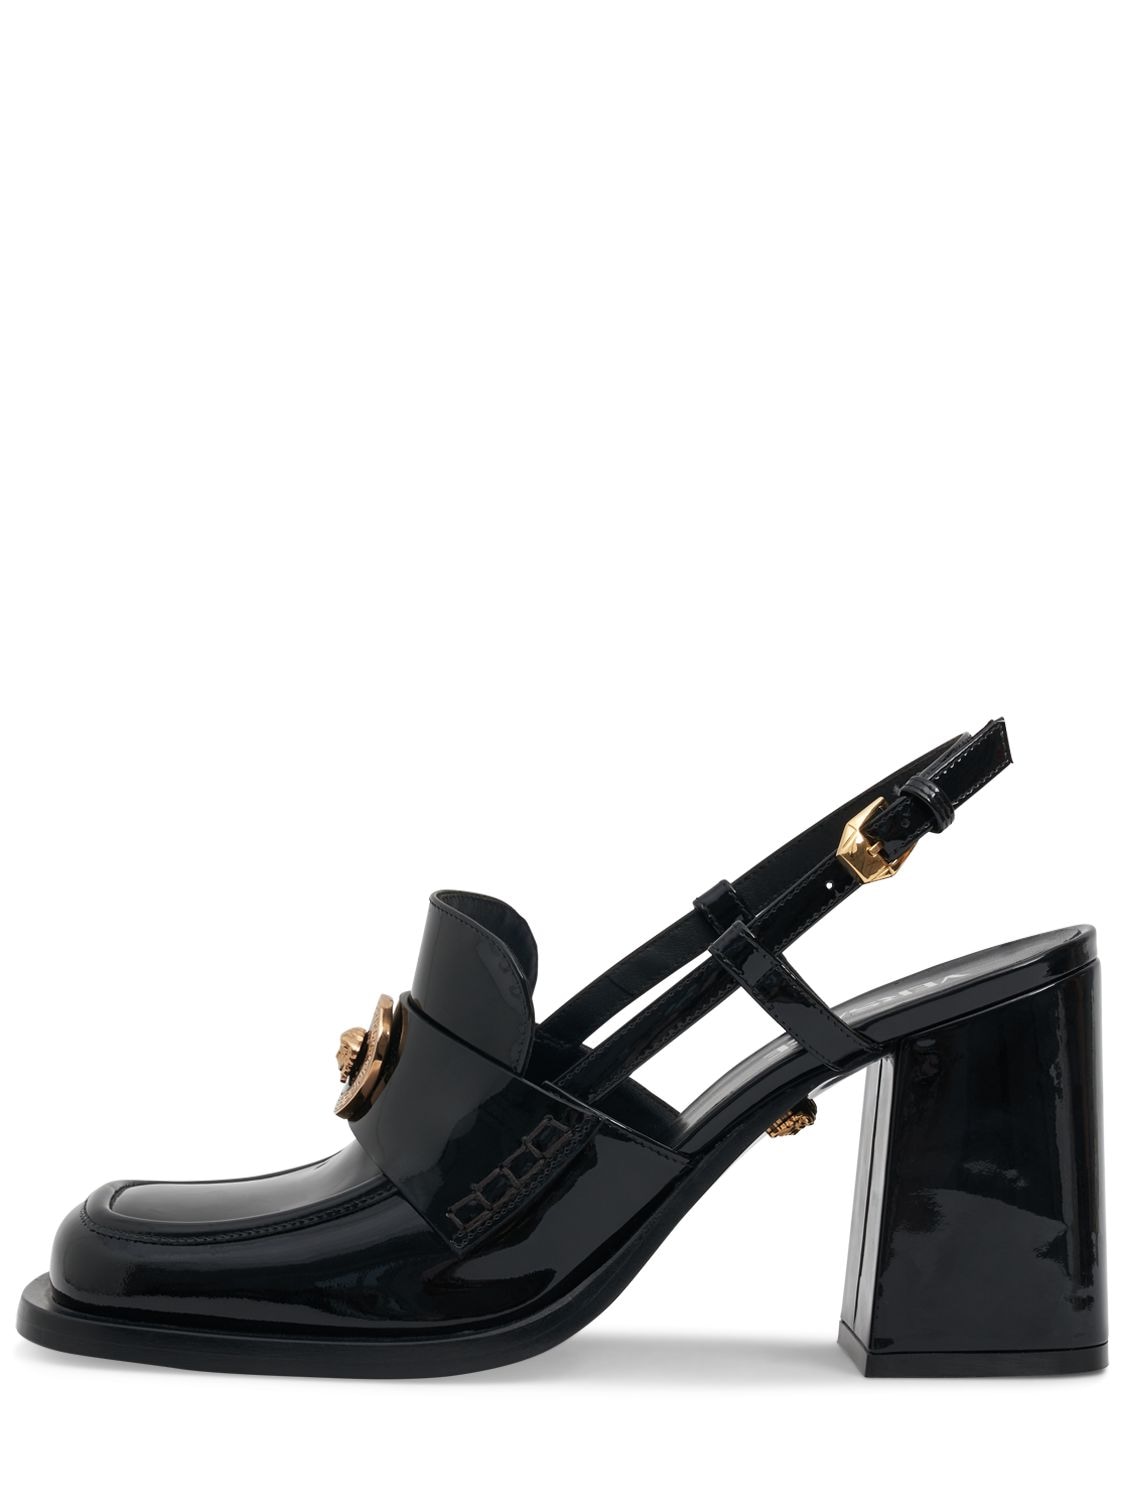 Versace 85mm Patent Leather Heels In Black